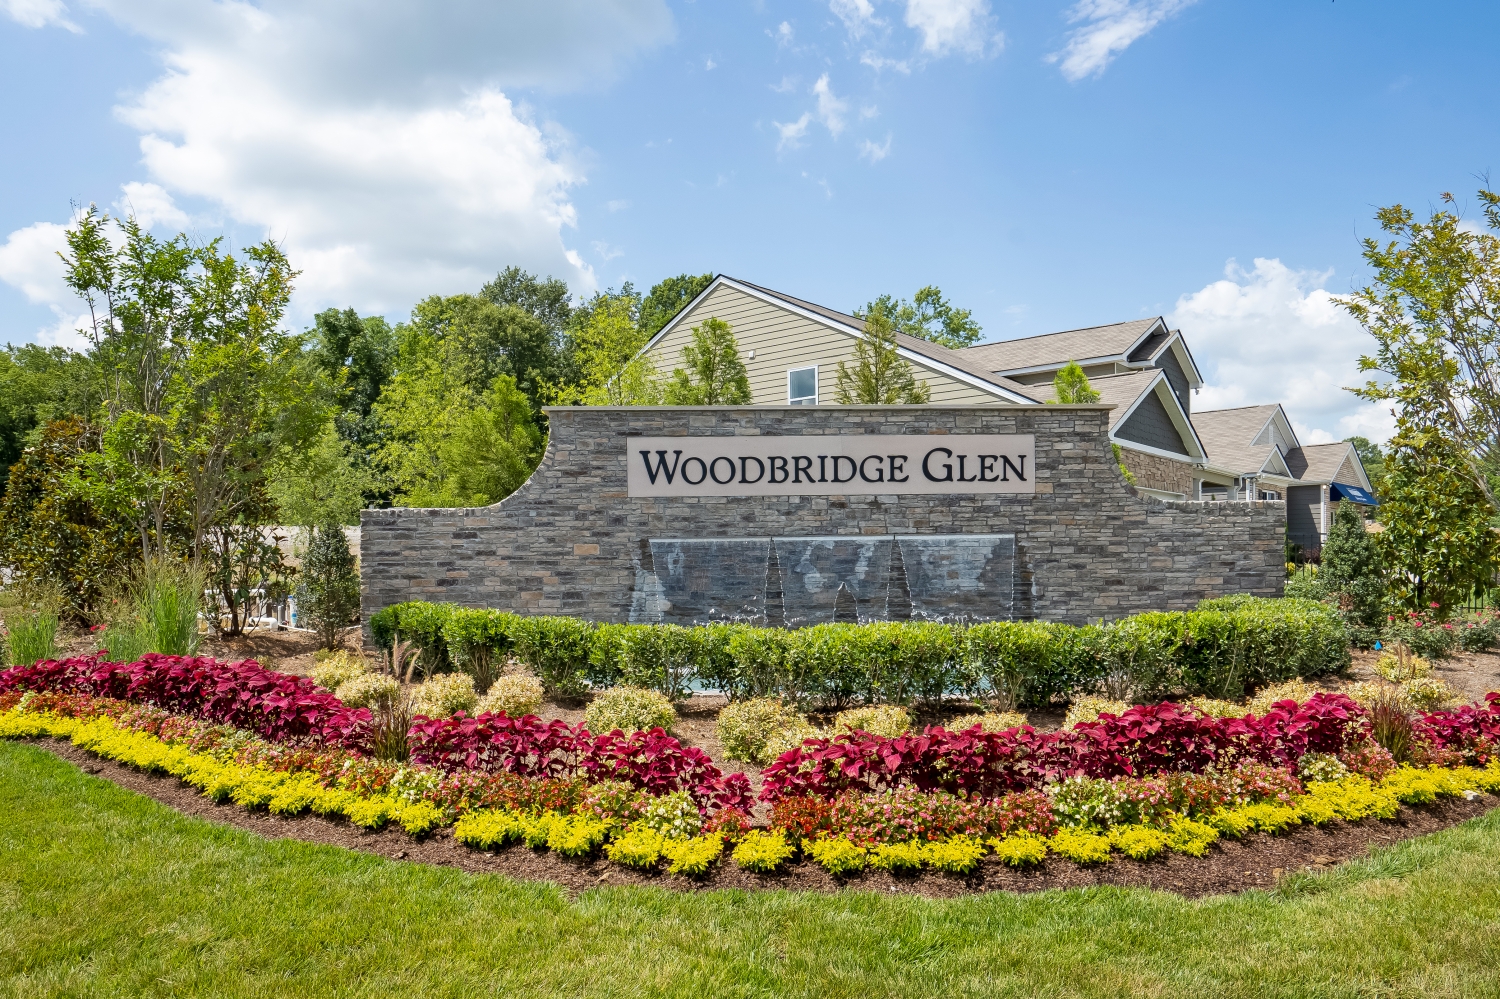 Woodbridge Glen Community